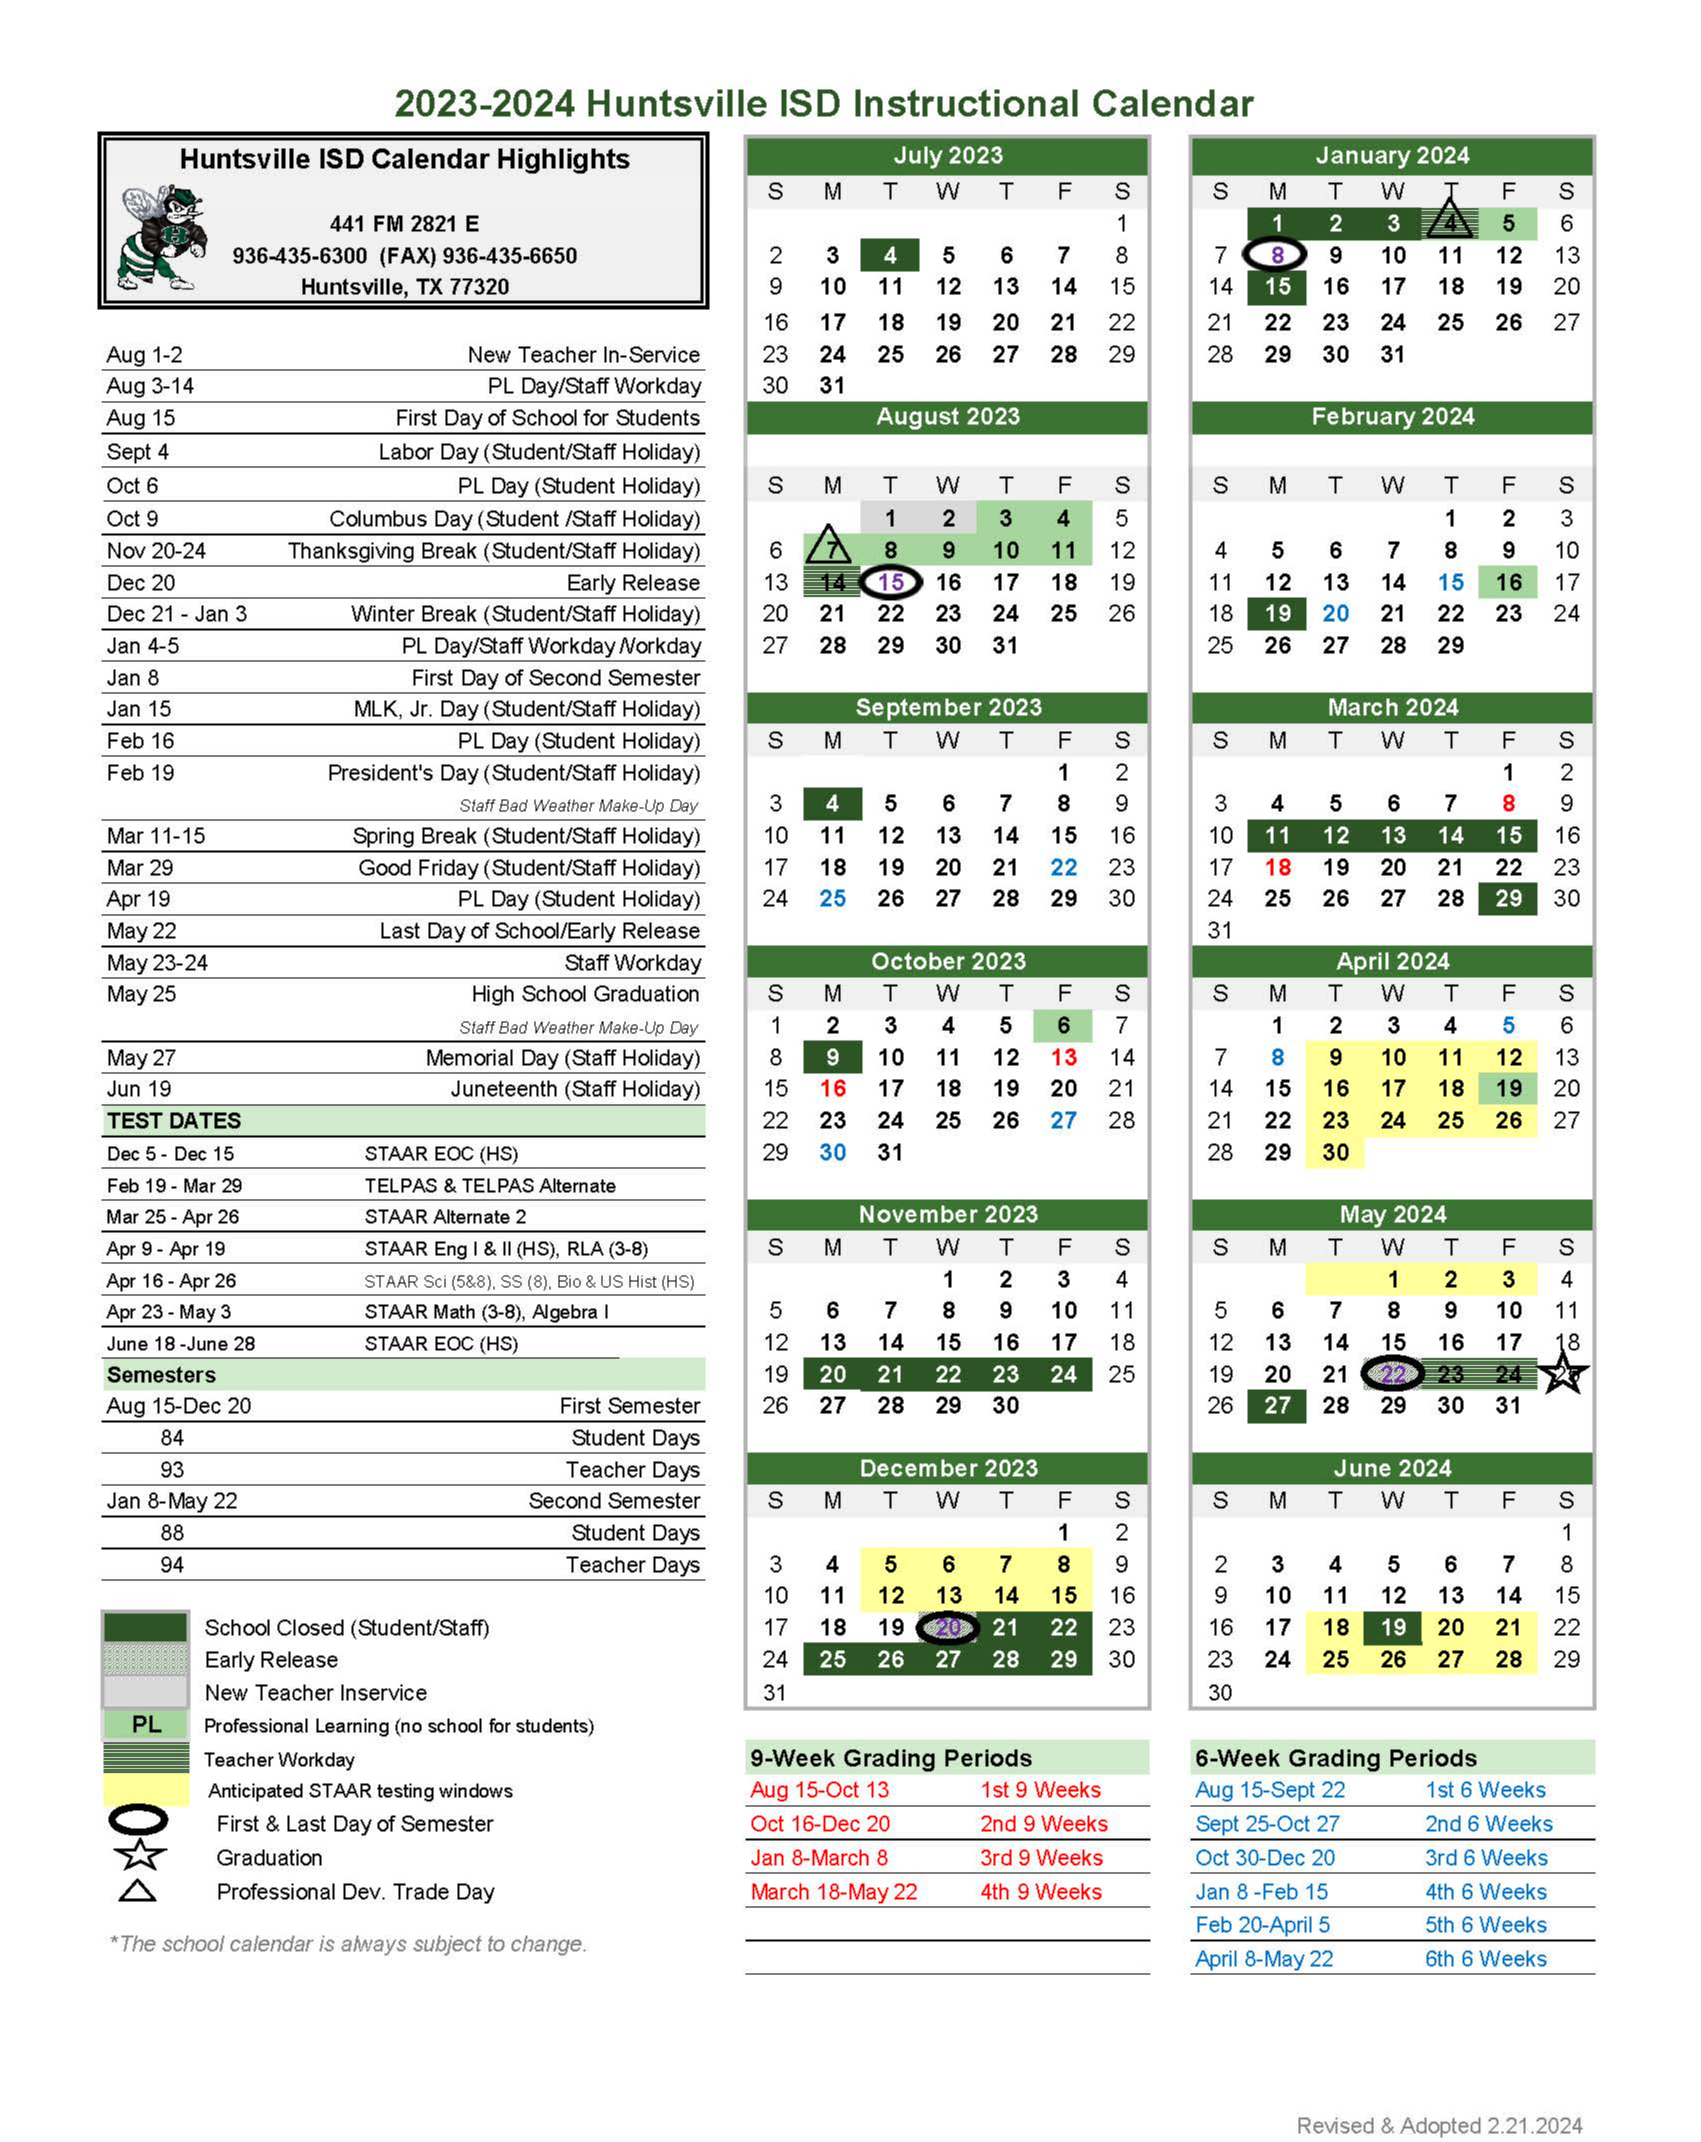 Revised academic calendar for 2023-2024